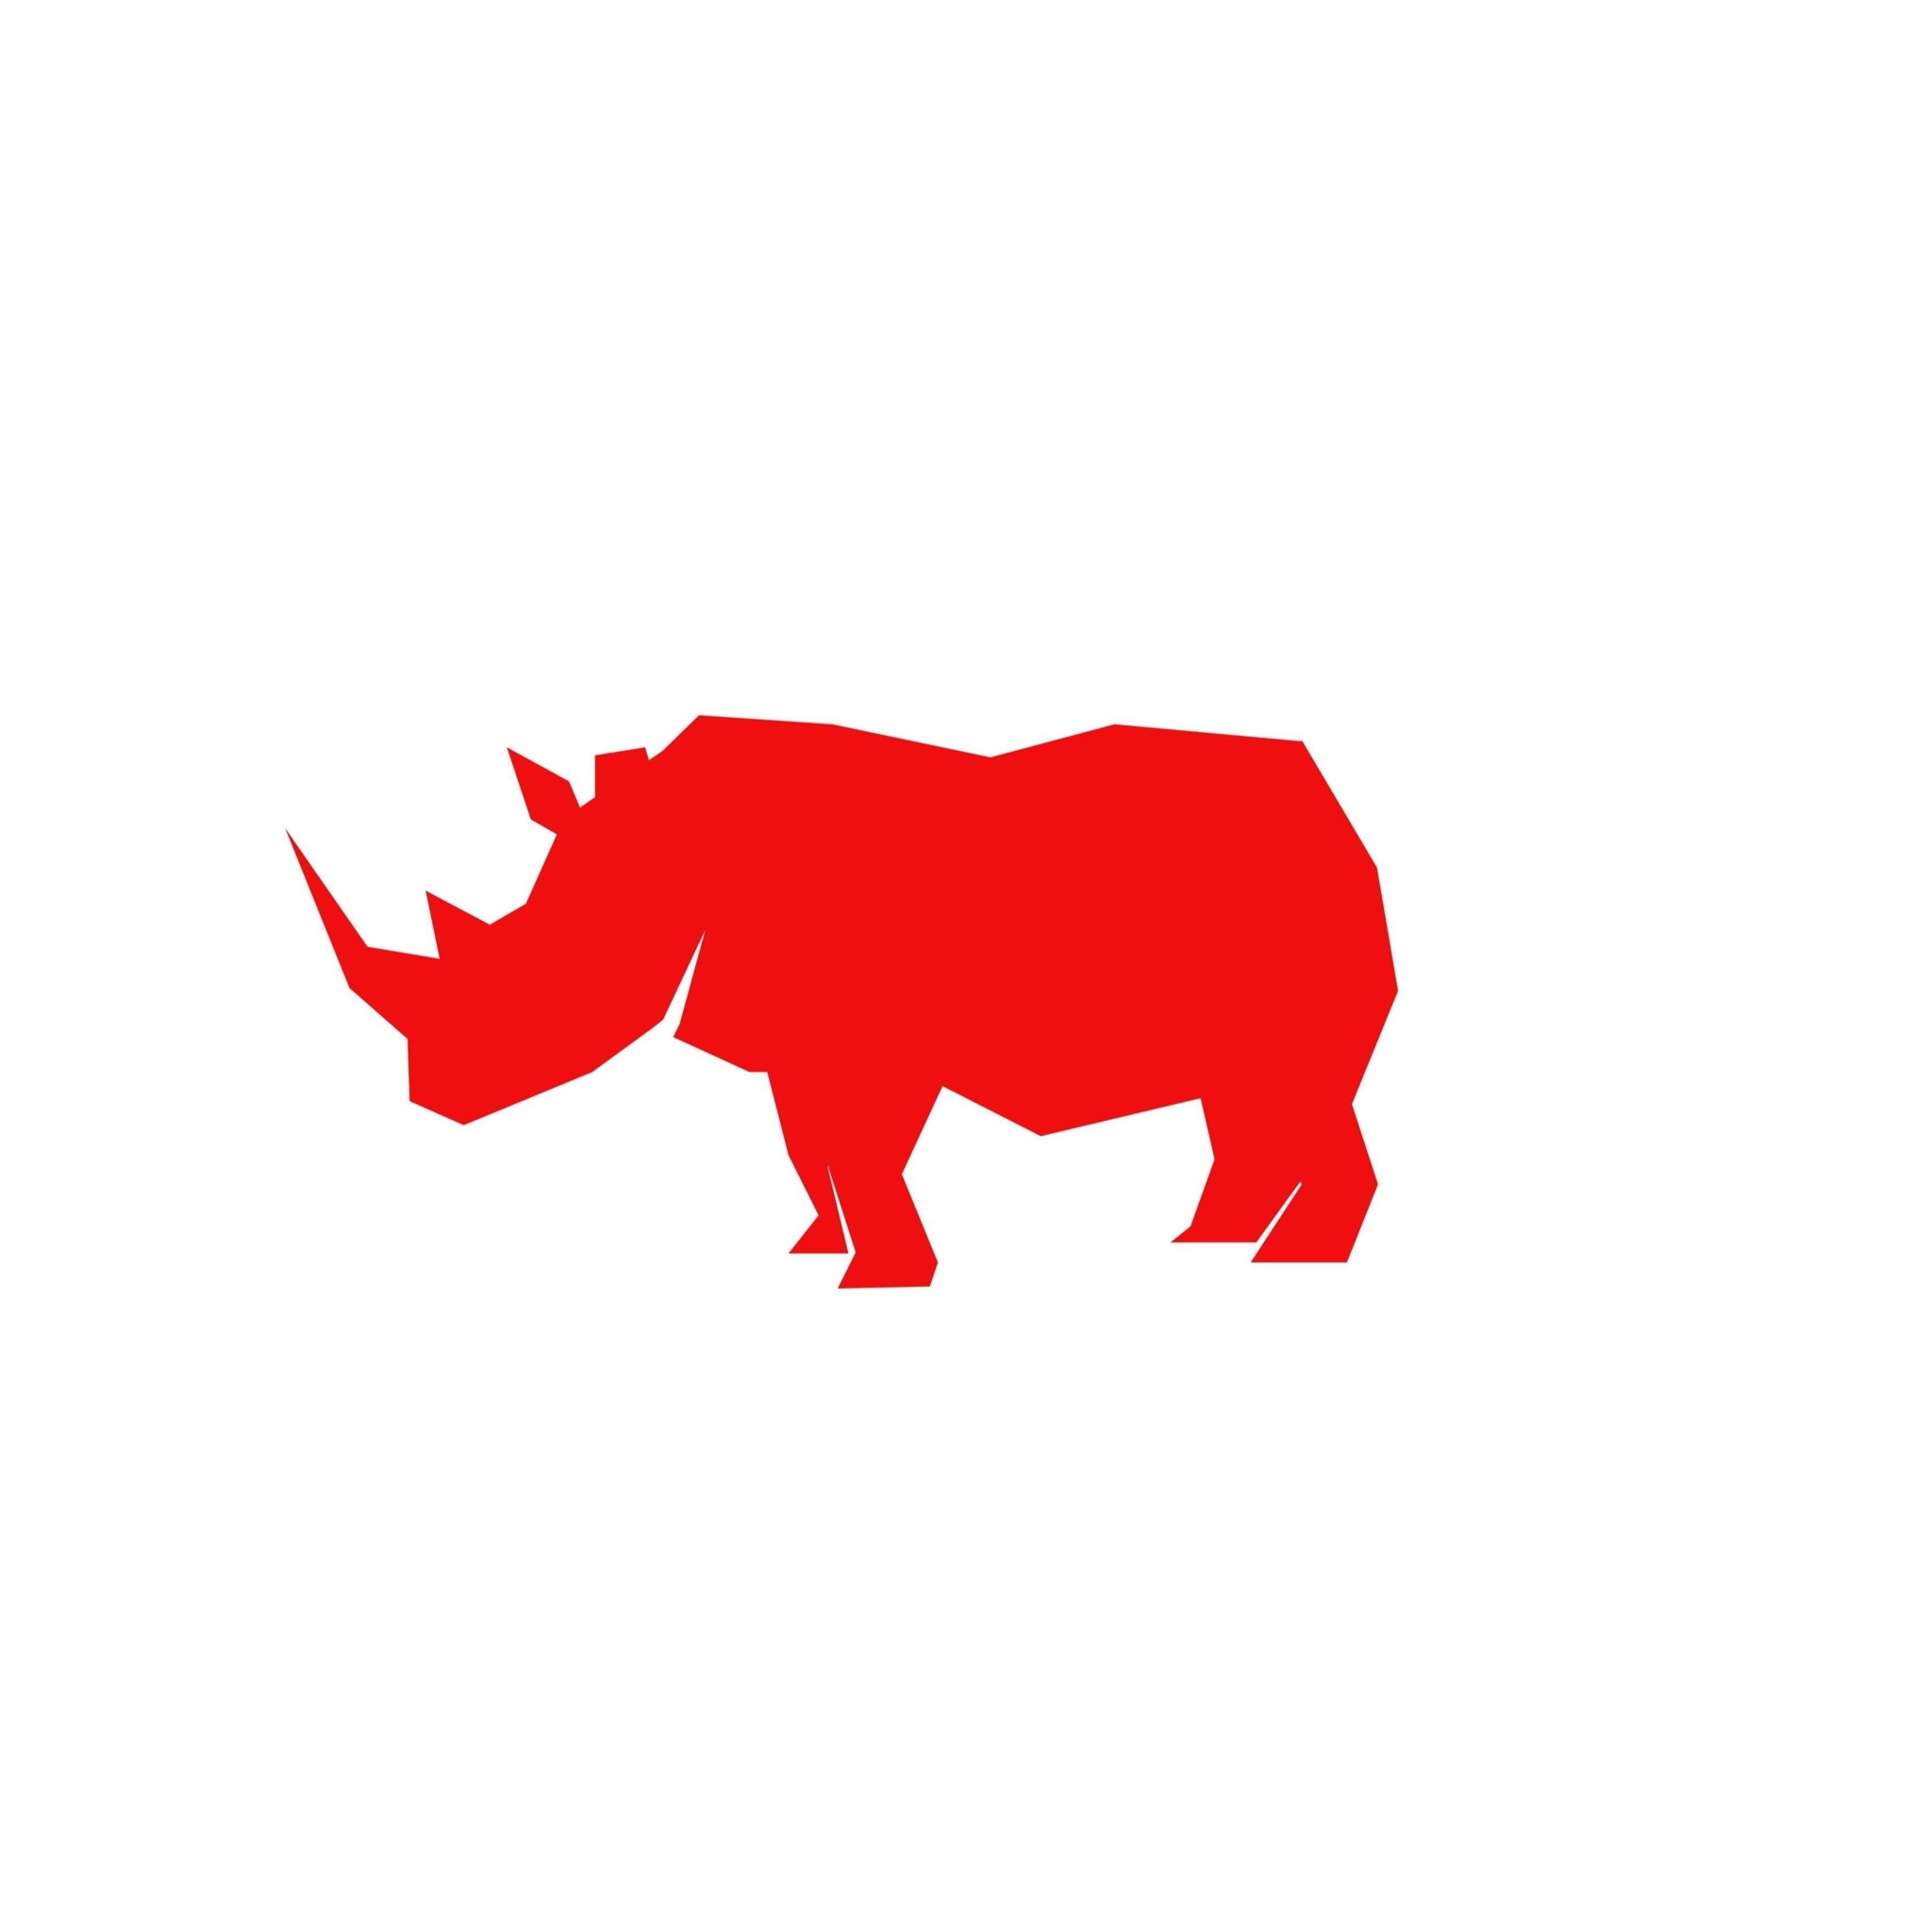 Rhino Shrink Wrap - Industrial Equipment & Supplies